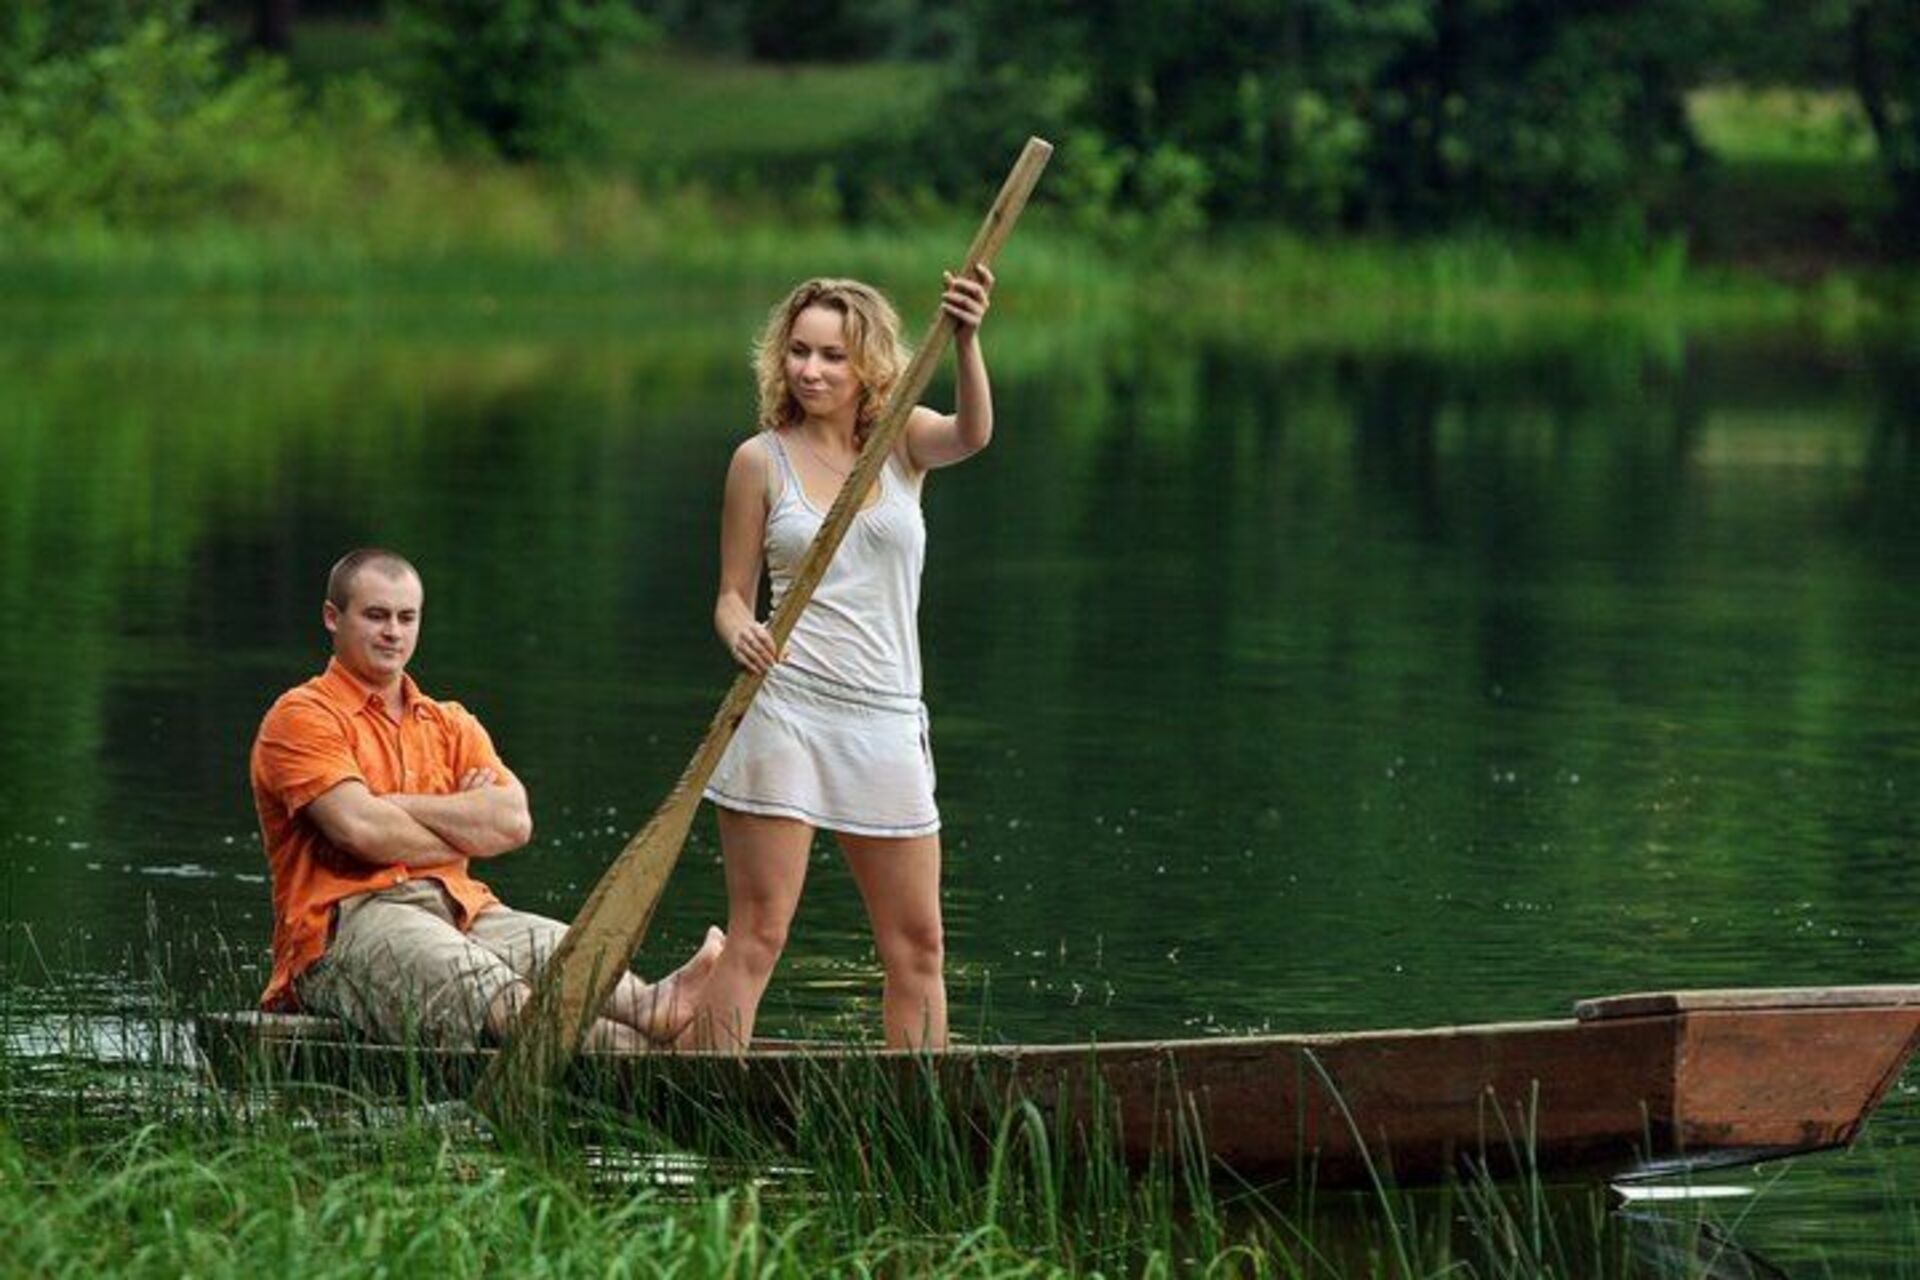 Муж ловит жену. Девушка на лодке с веслами. Мужчина и женщина на рыбалке. Приколы на речке. Женщина и мужчина рыбачат.